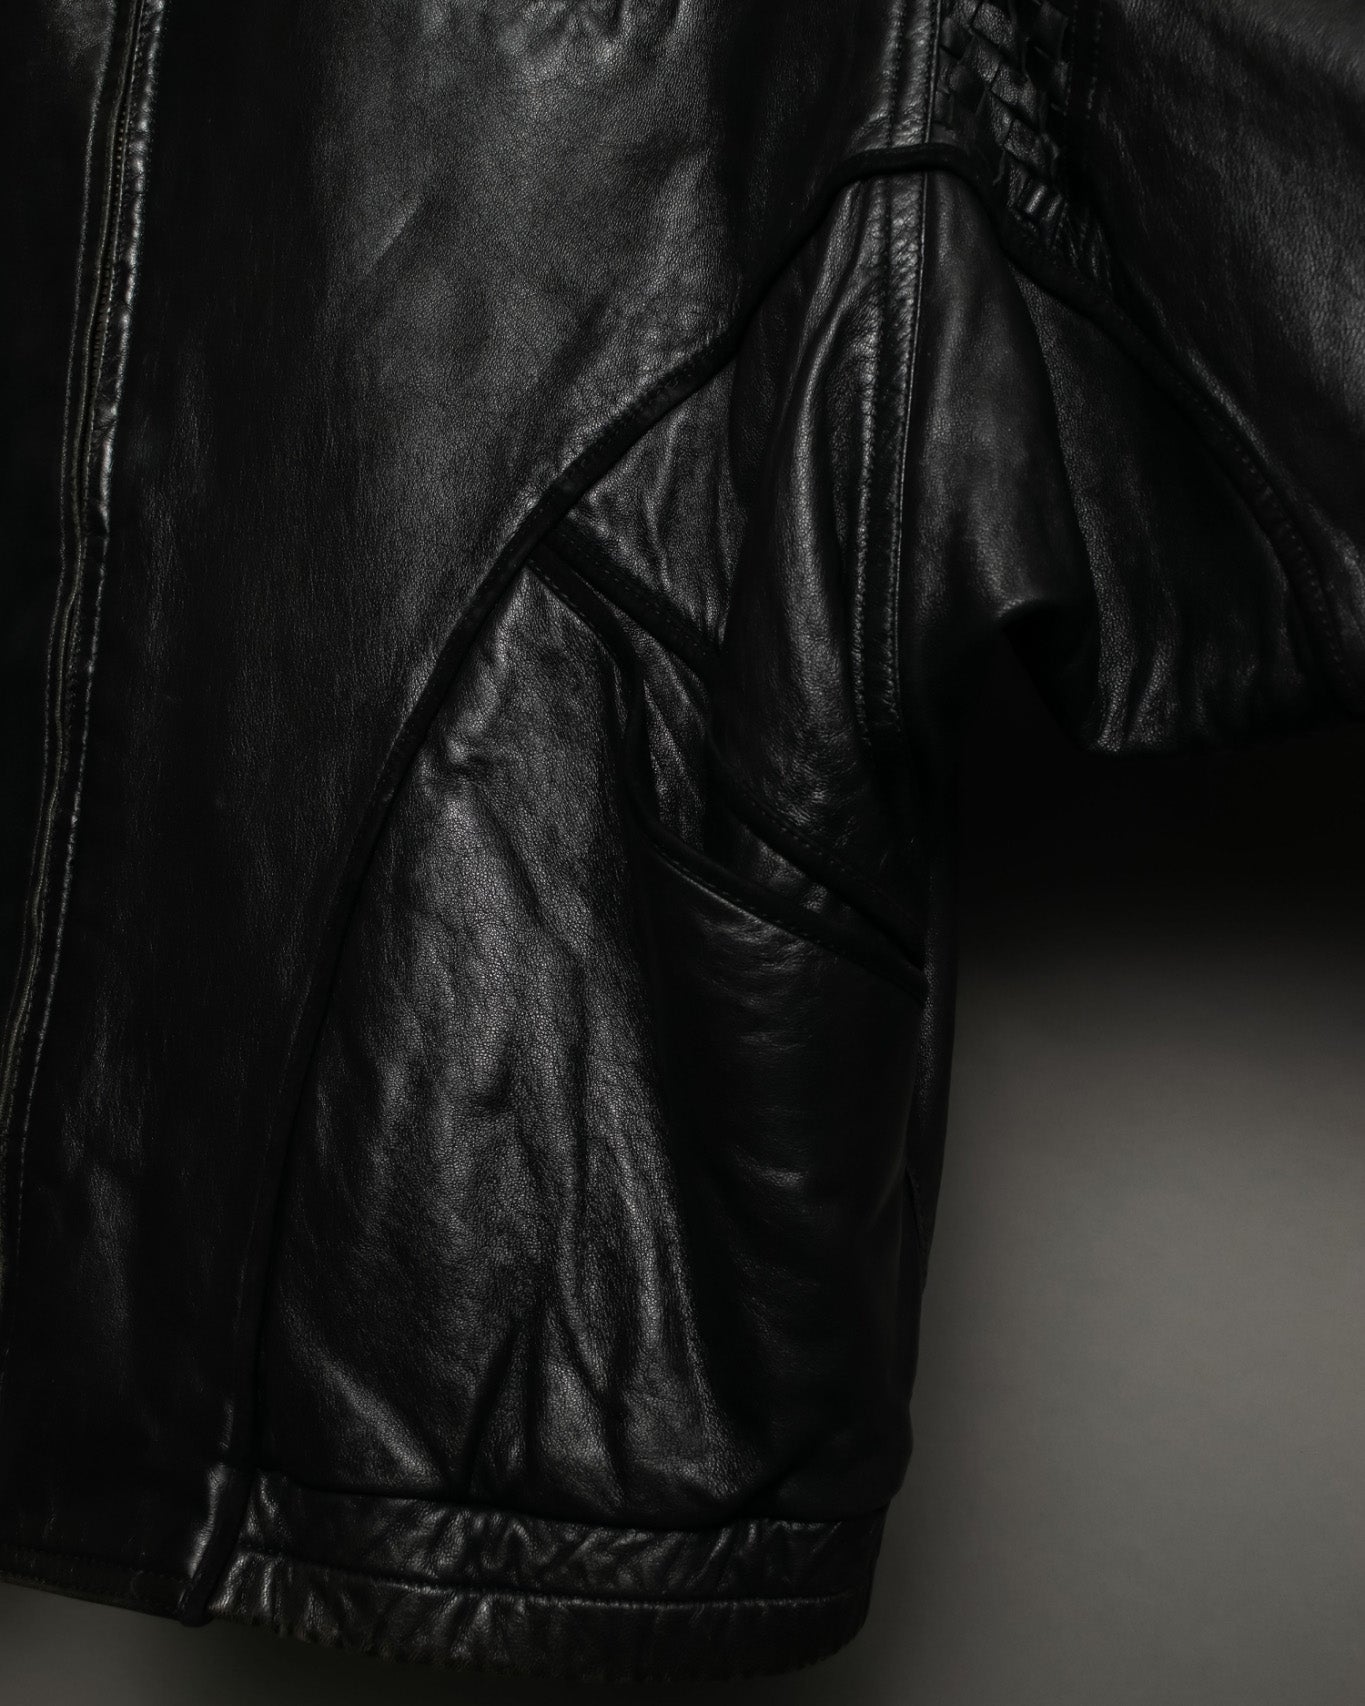 "PELLE PELLE" Leather Braid Double Back Jacket